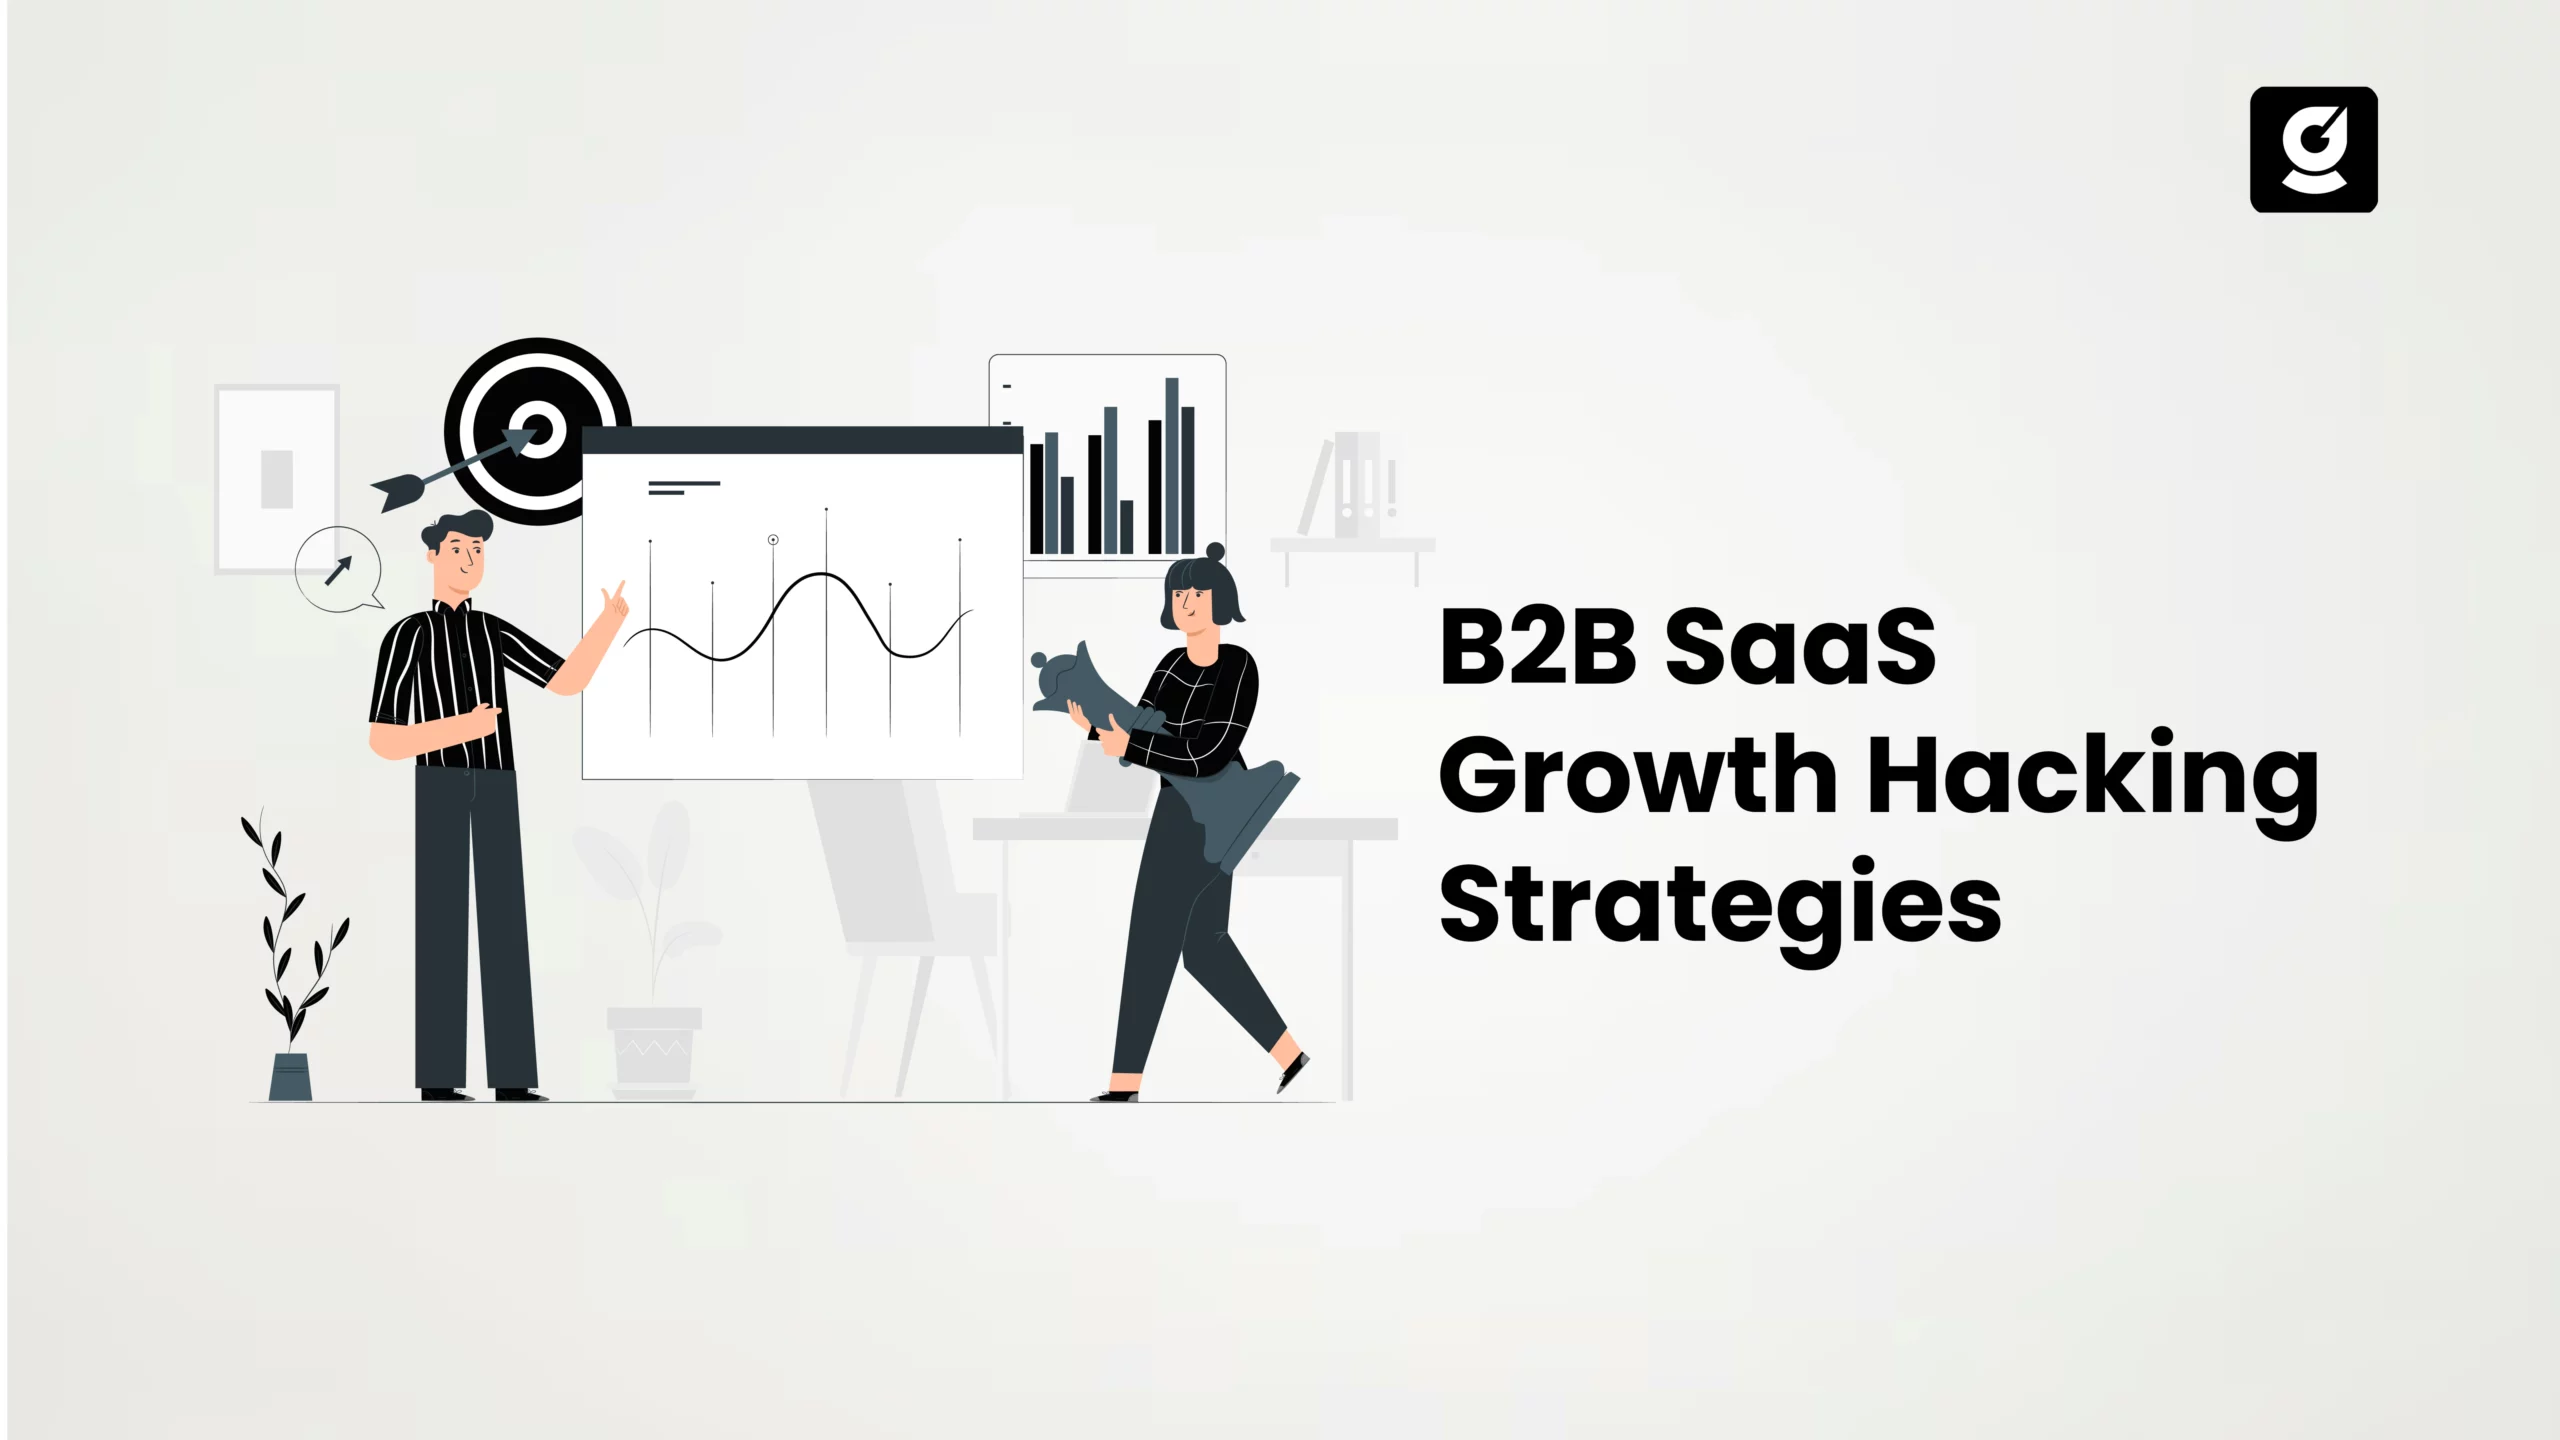 B2B SaaS Growth Hacking Strategies